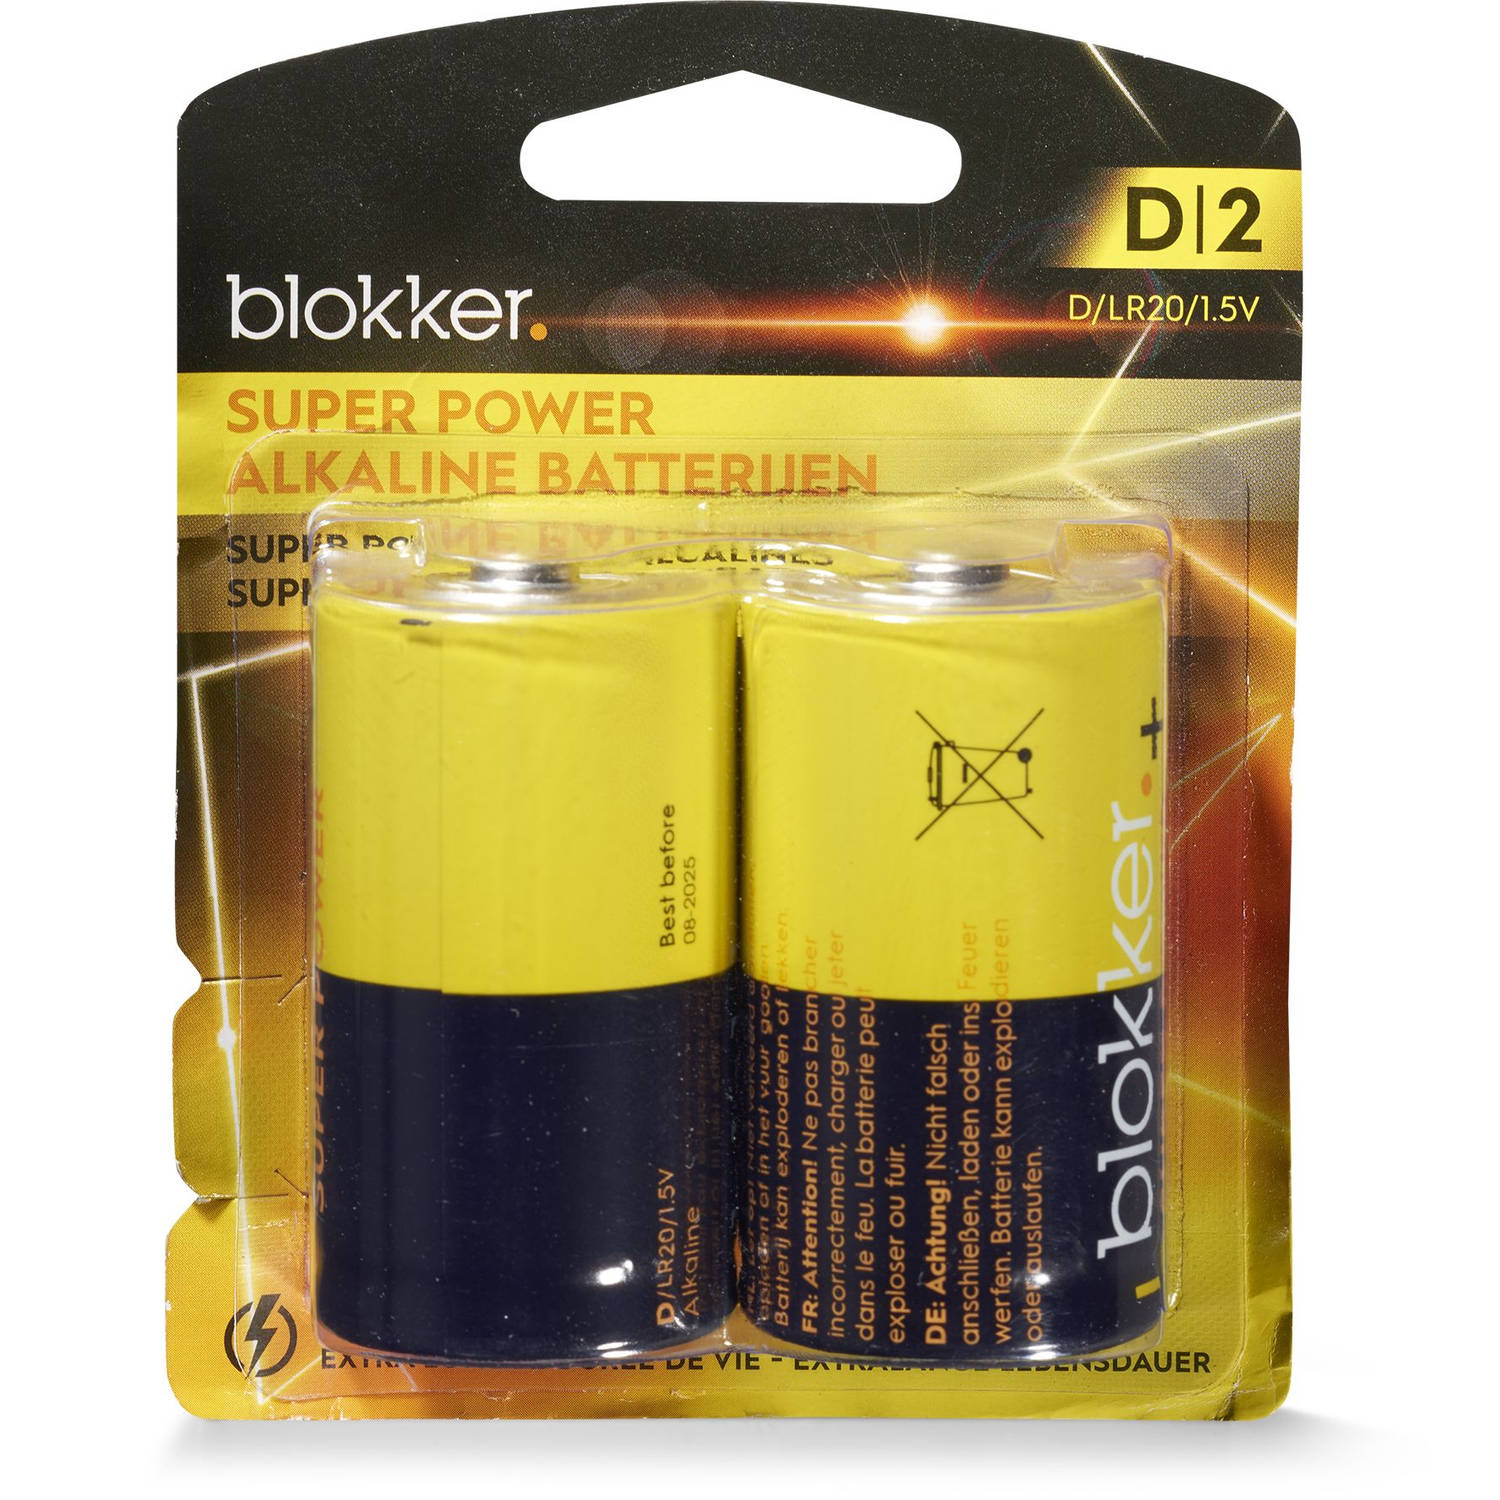 lijden Uithoudingsvermogen Oppervlakkig Blokker Alkaline Batterijen - D - 2 stuks | Blokker